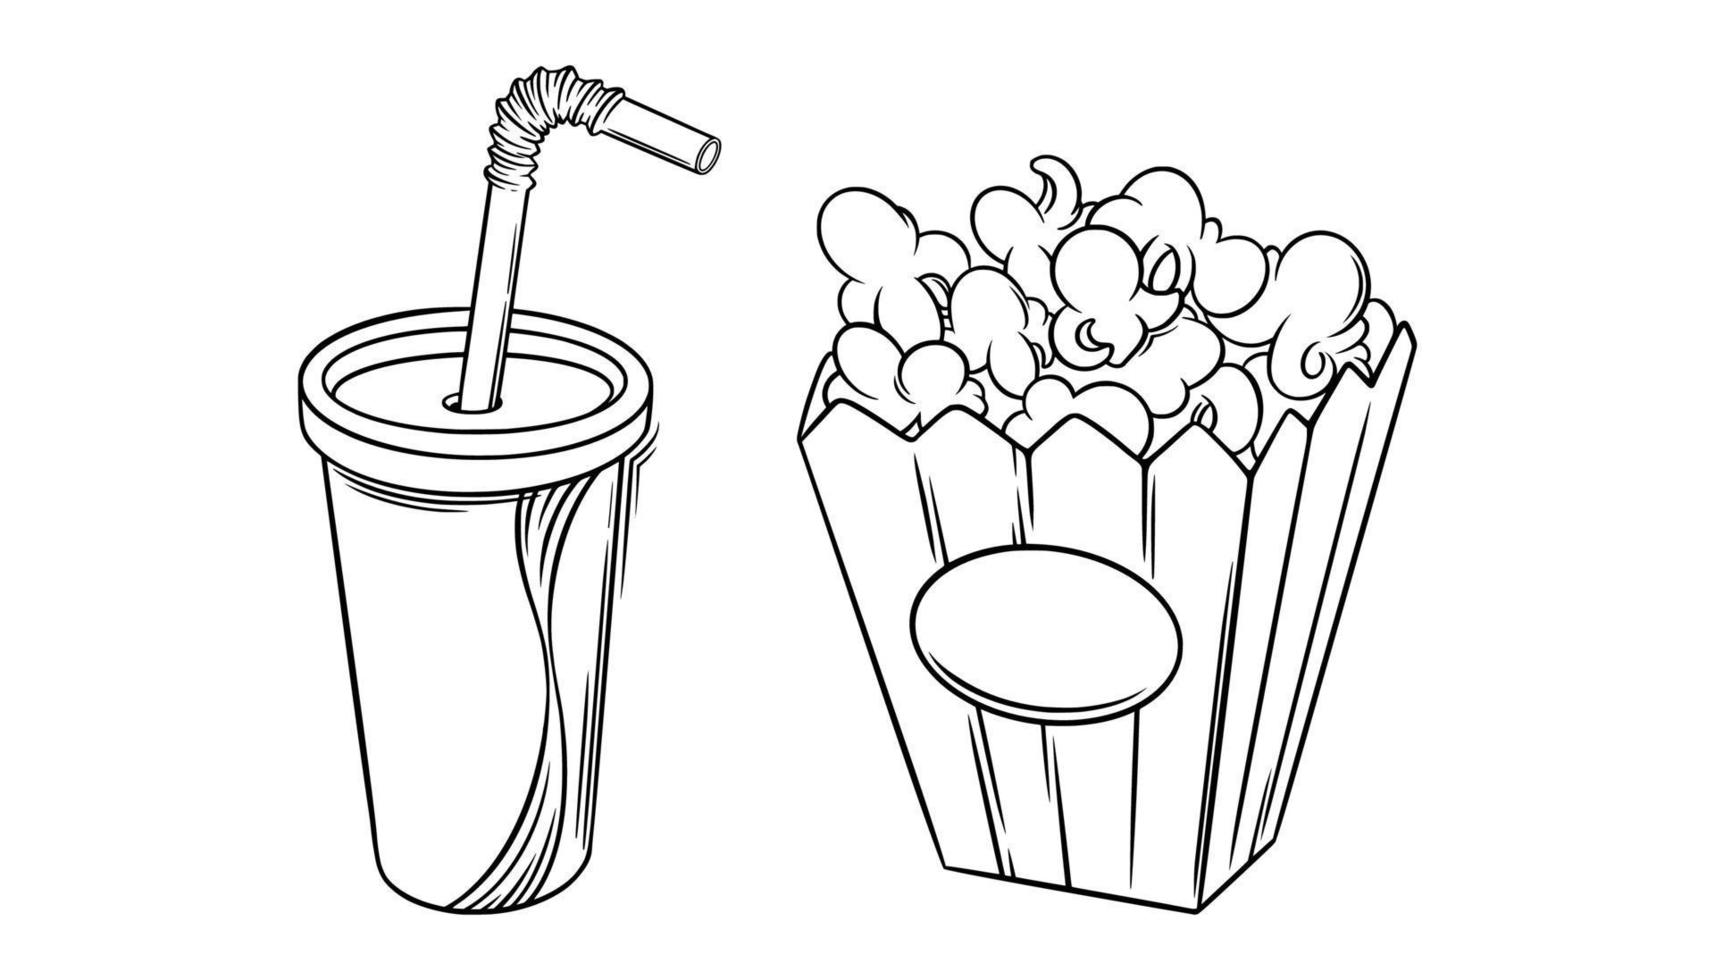 Popcorn basket and cola sketch. Cinema pop corn in doodle style. Vector illustration